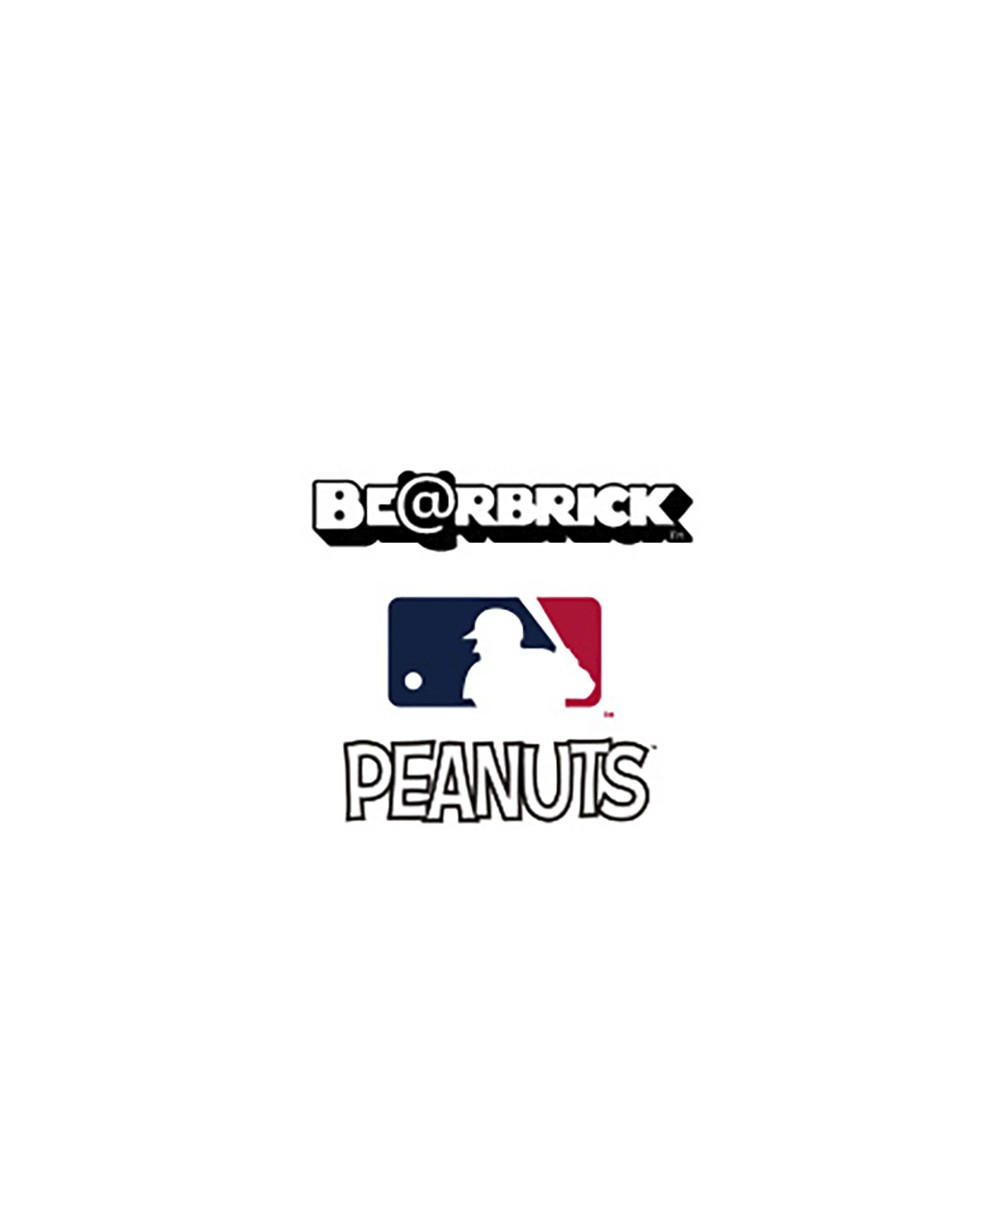 Die Logos der Major League Baseball, Be@rbrick und Peanuts.